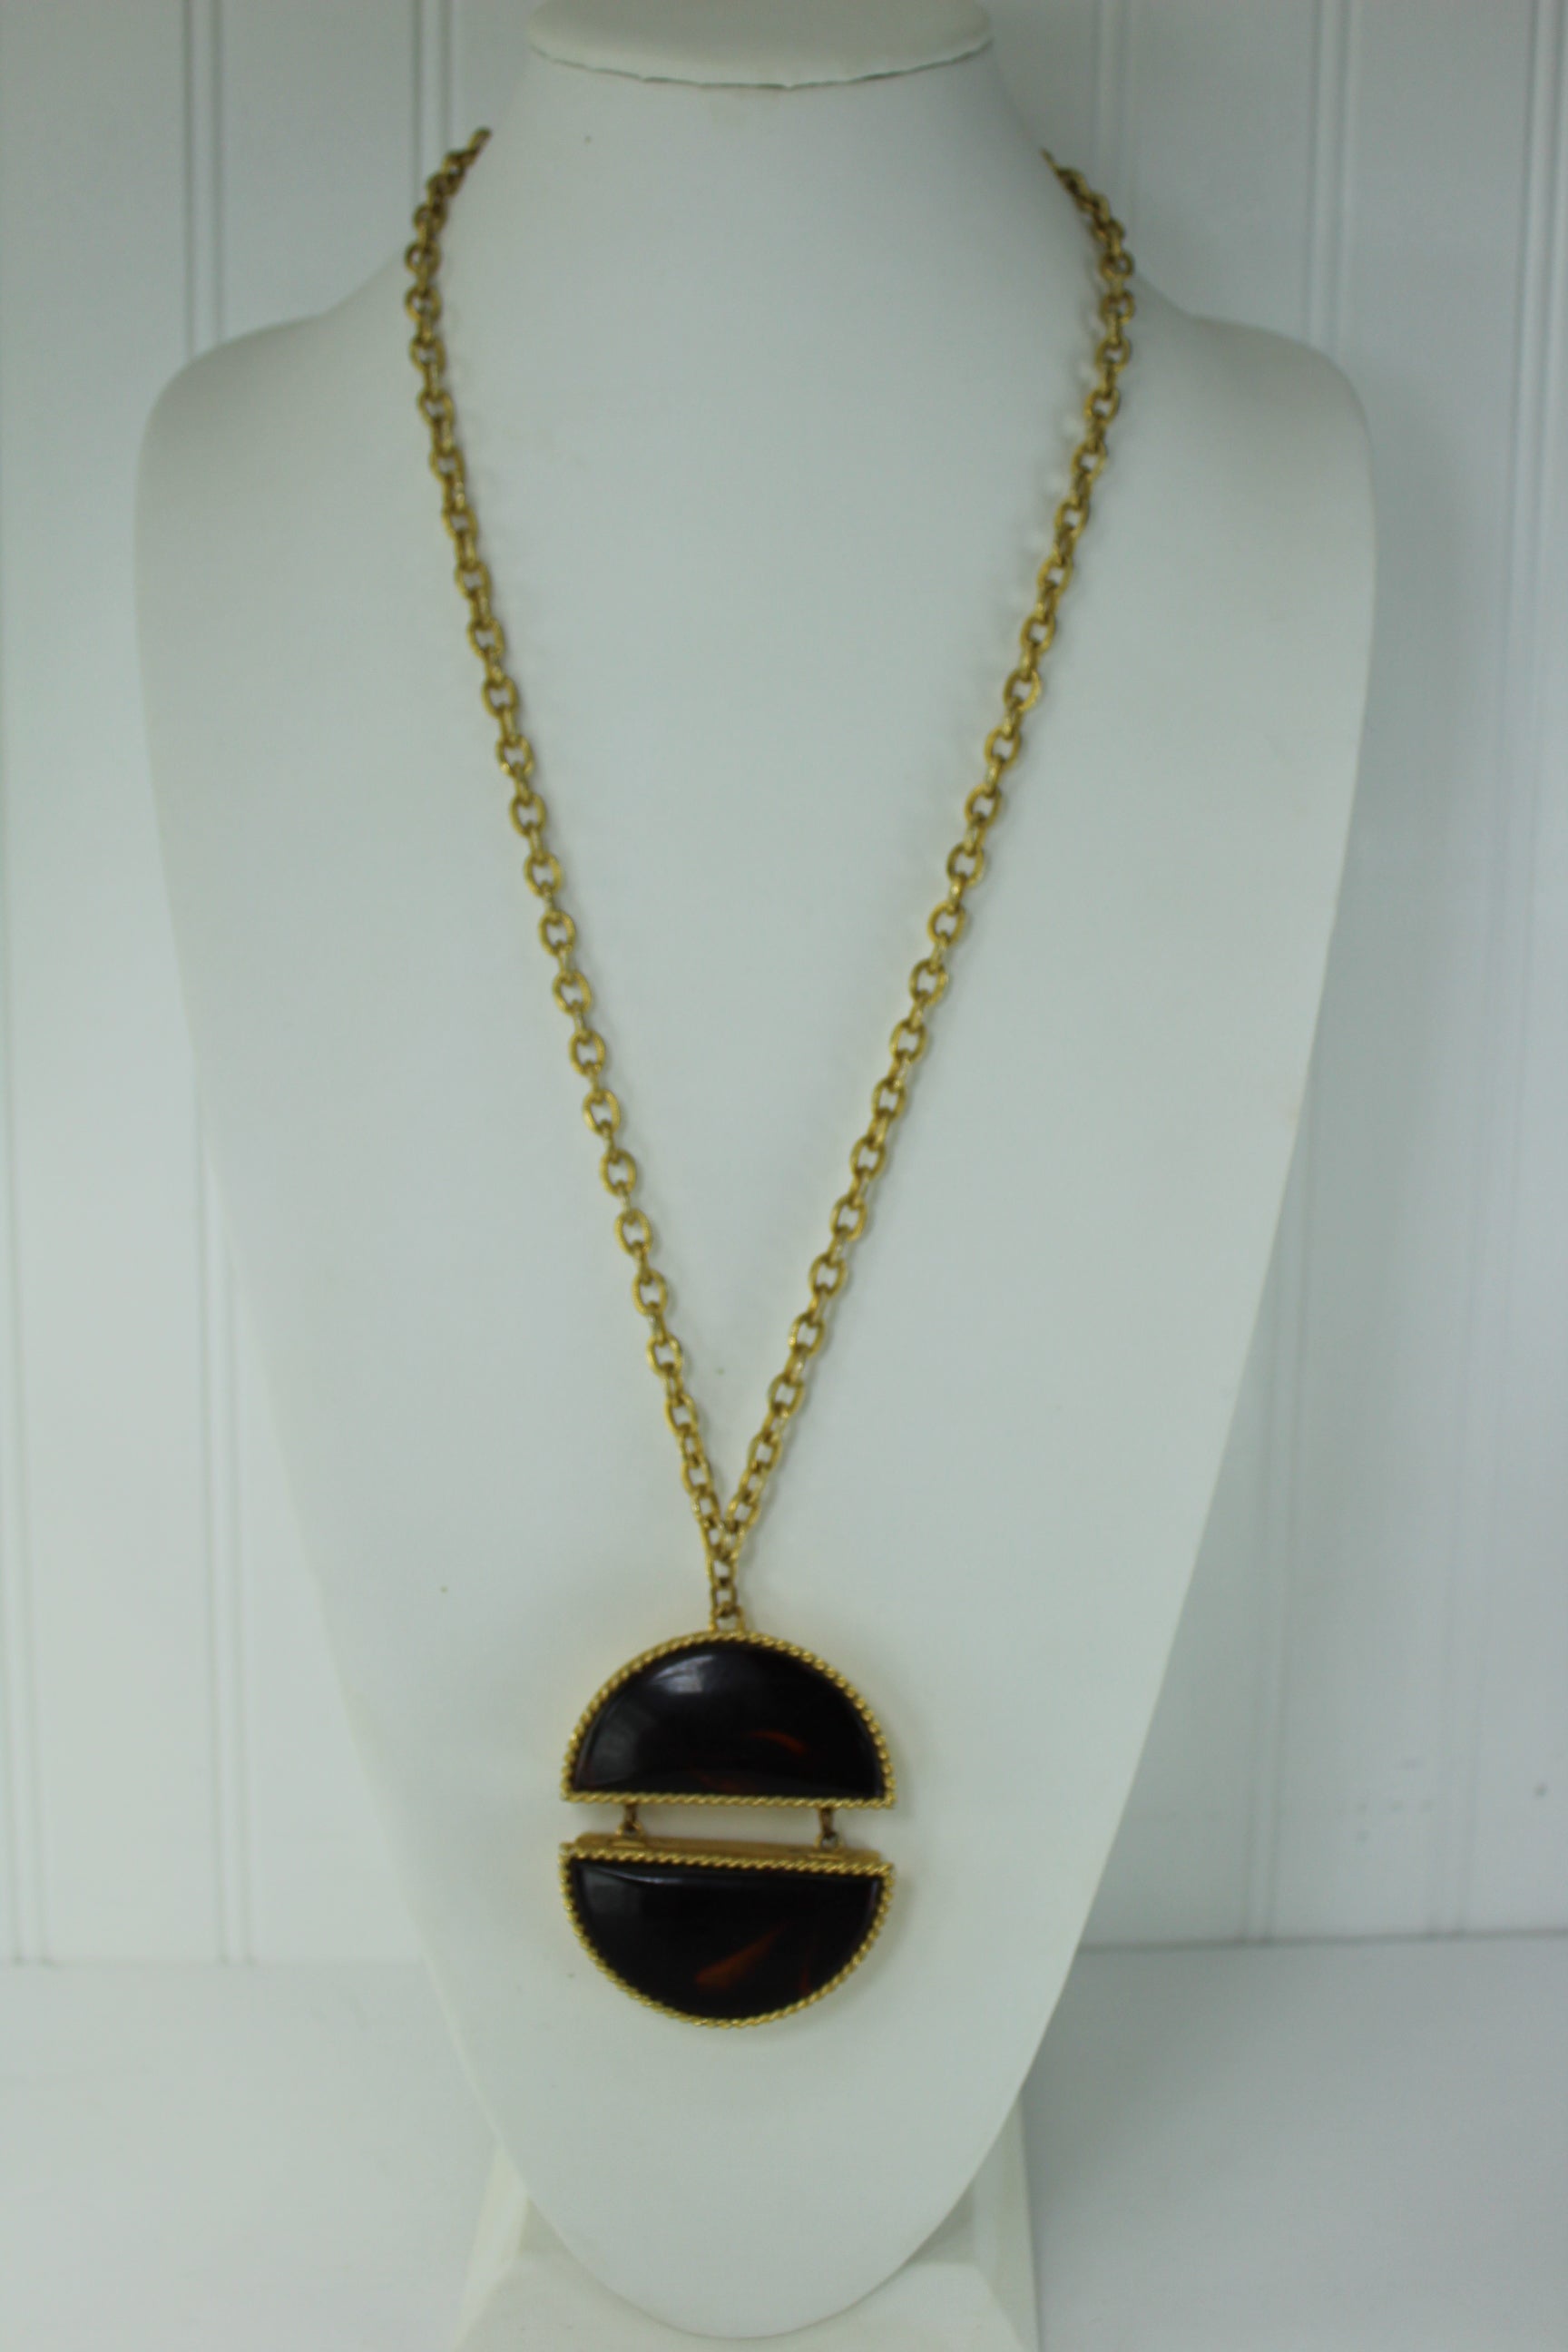 Estee Lauder Necklace Solid Perfume Faux Tortoise Rare 1960s heavy chain necklace